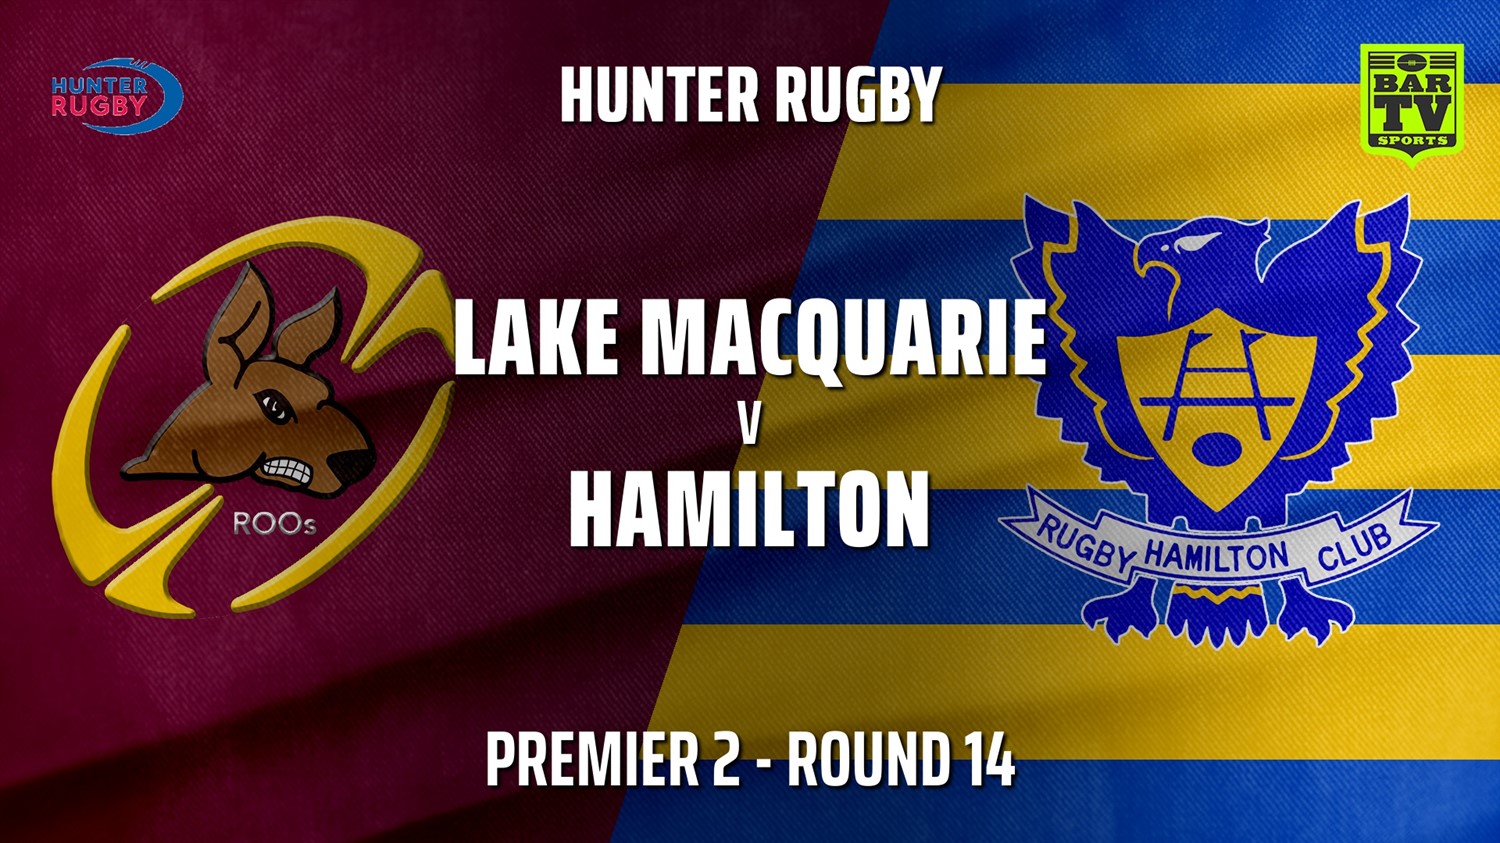 210724-Hunter Rugby Round 14 - Premier 2 - Lake Macquarie v Hamilton Hawks Slate Image